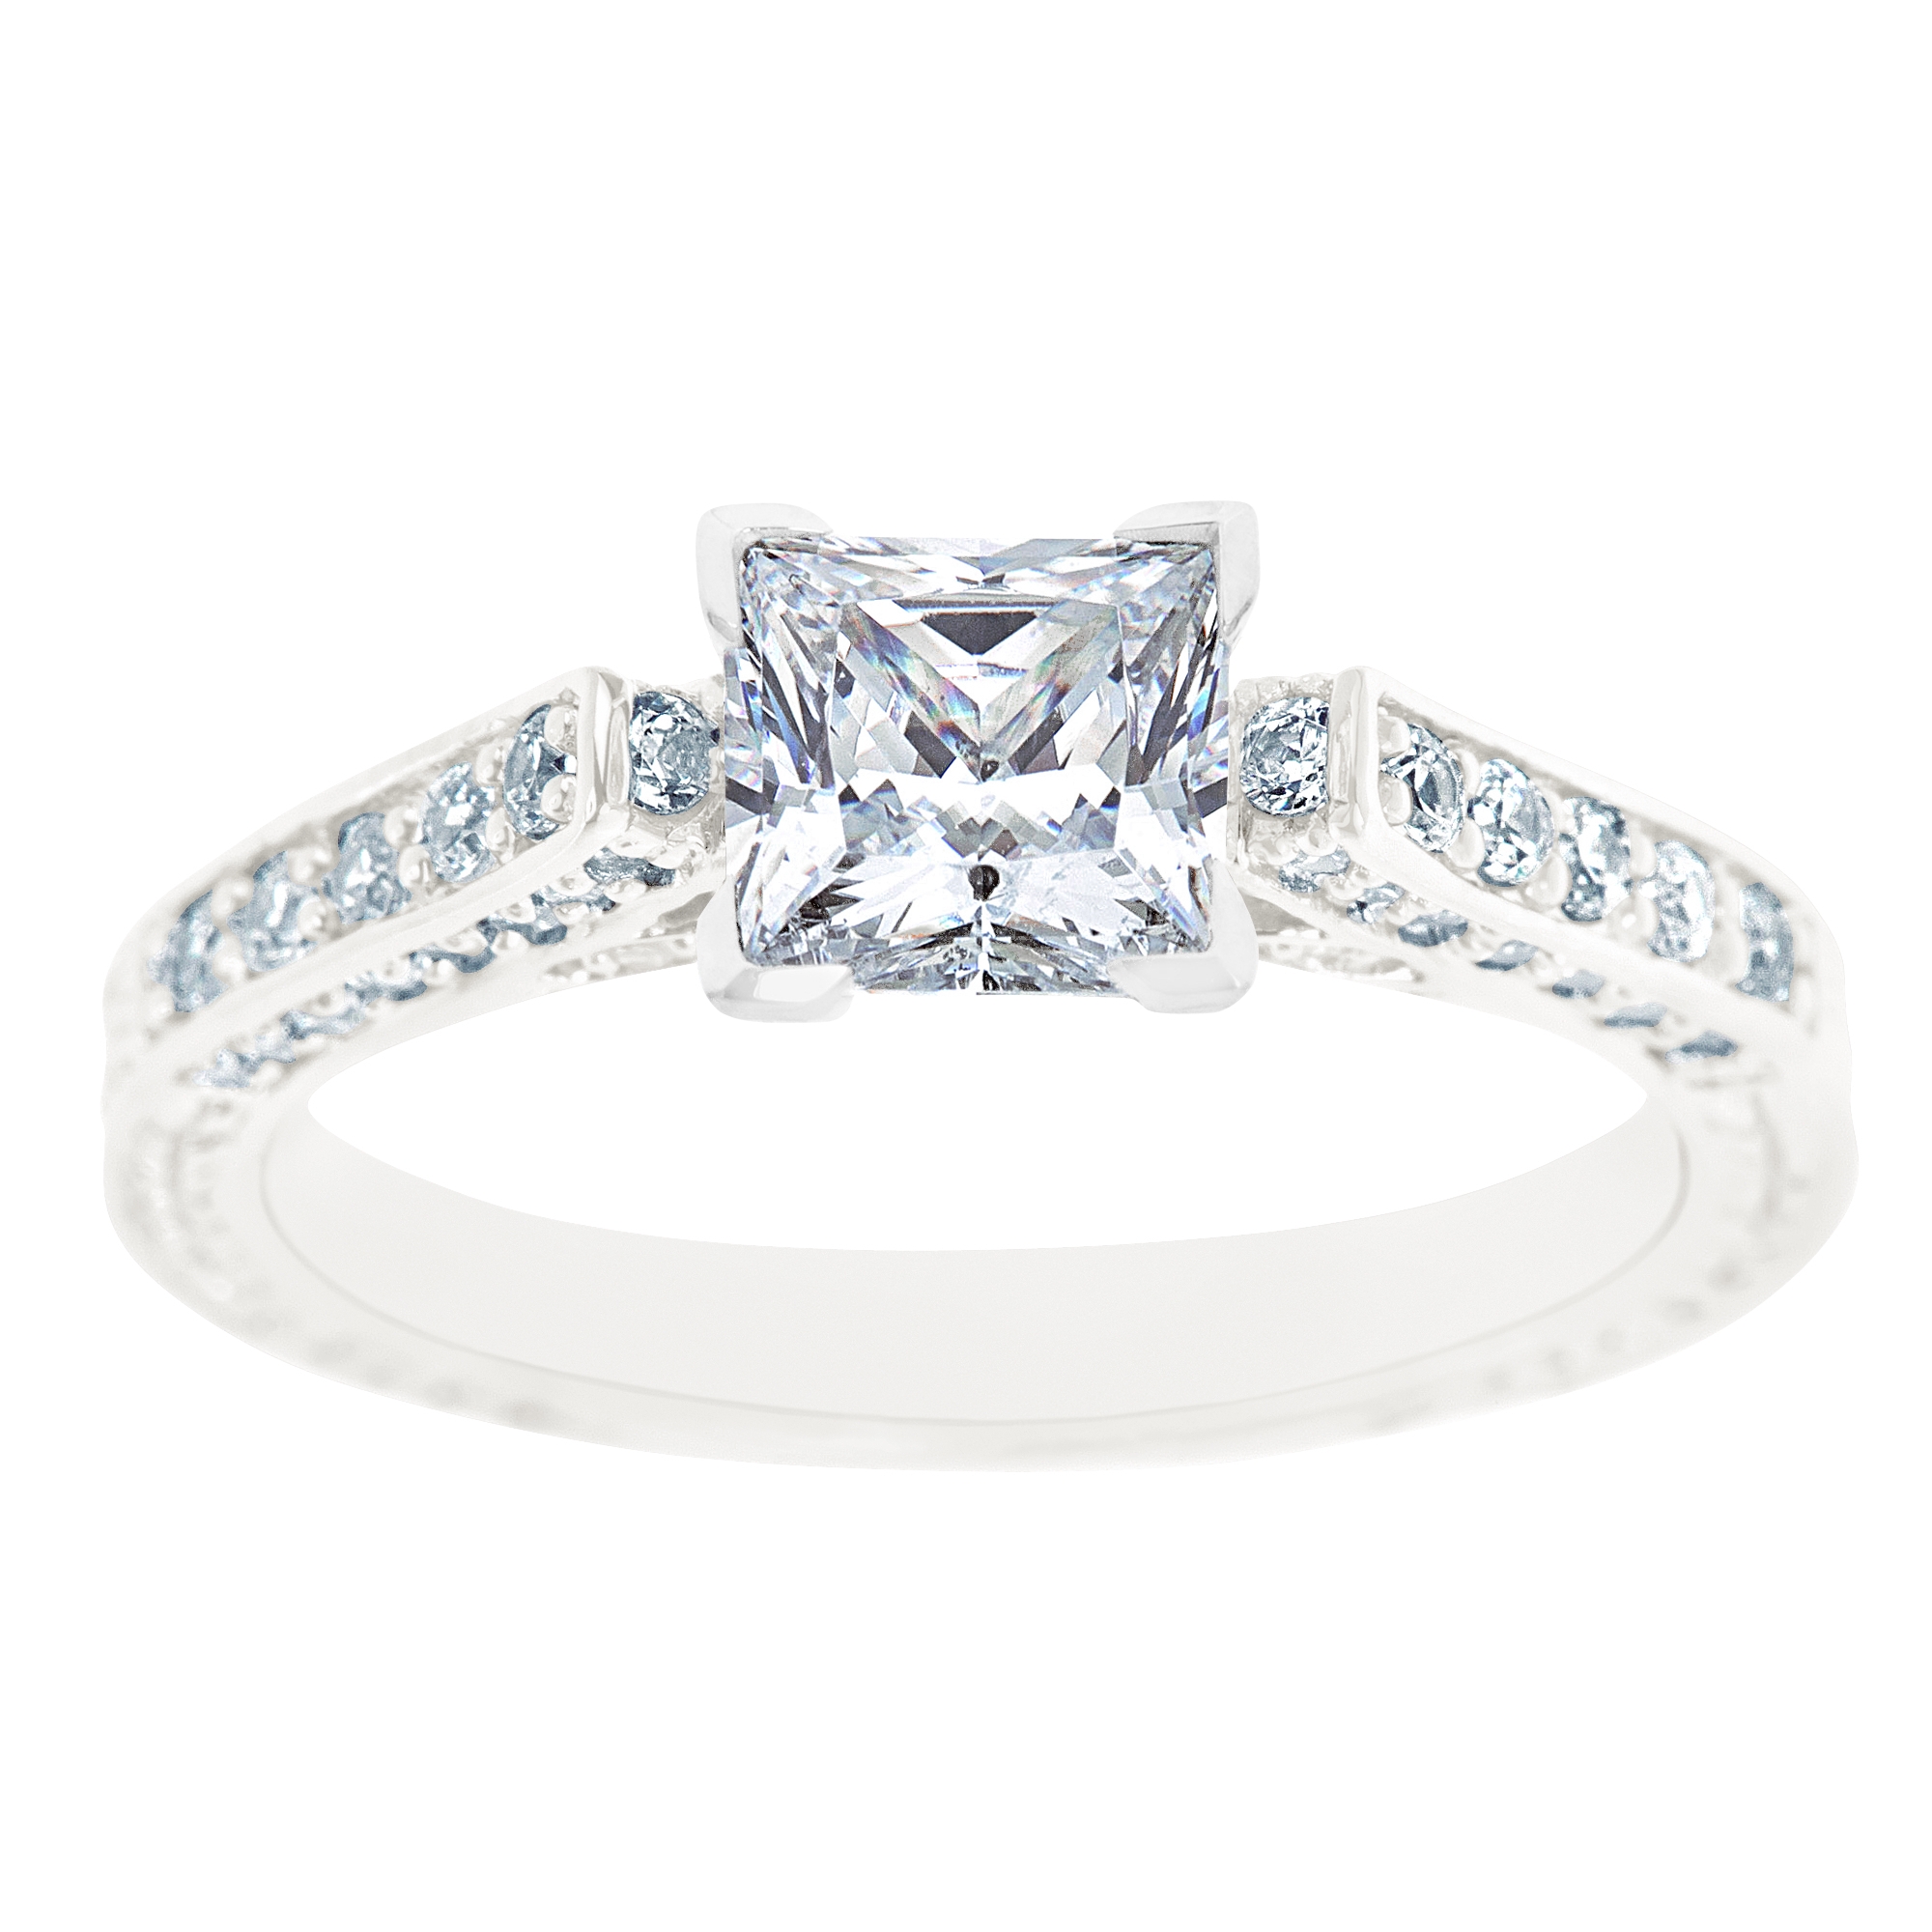 New York City Diamond District 14K White Gold Antique Triple Row Princess Cut Certified Diamond Engagement Ring